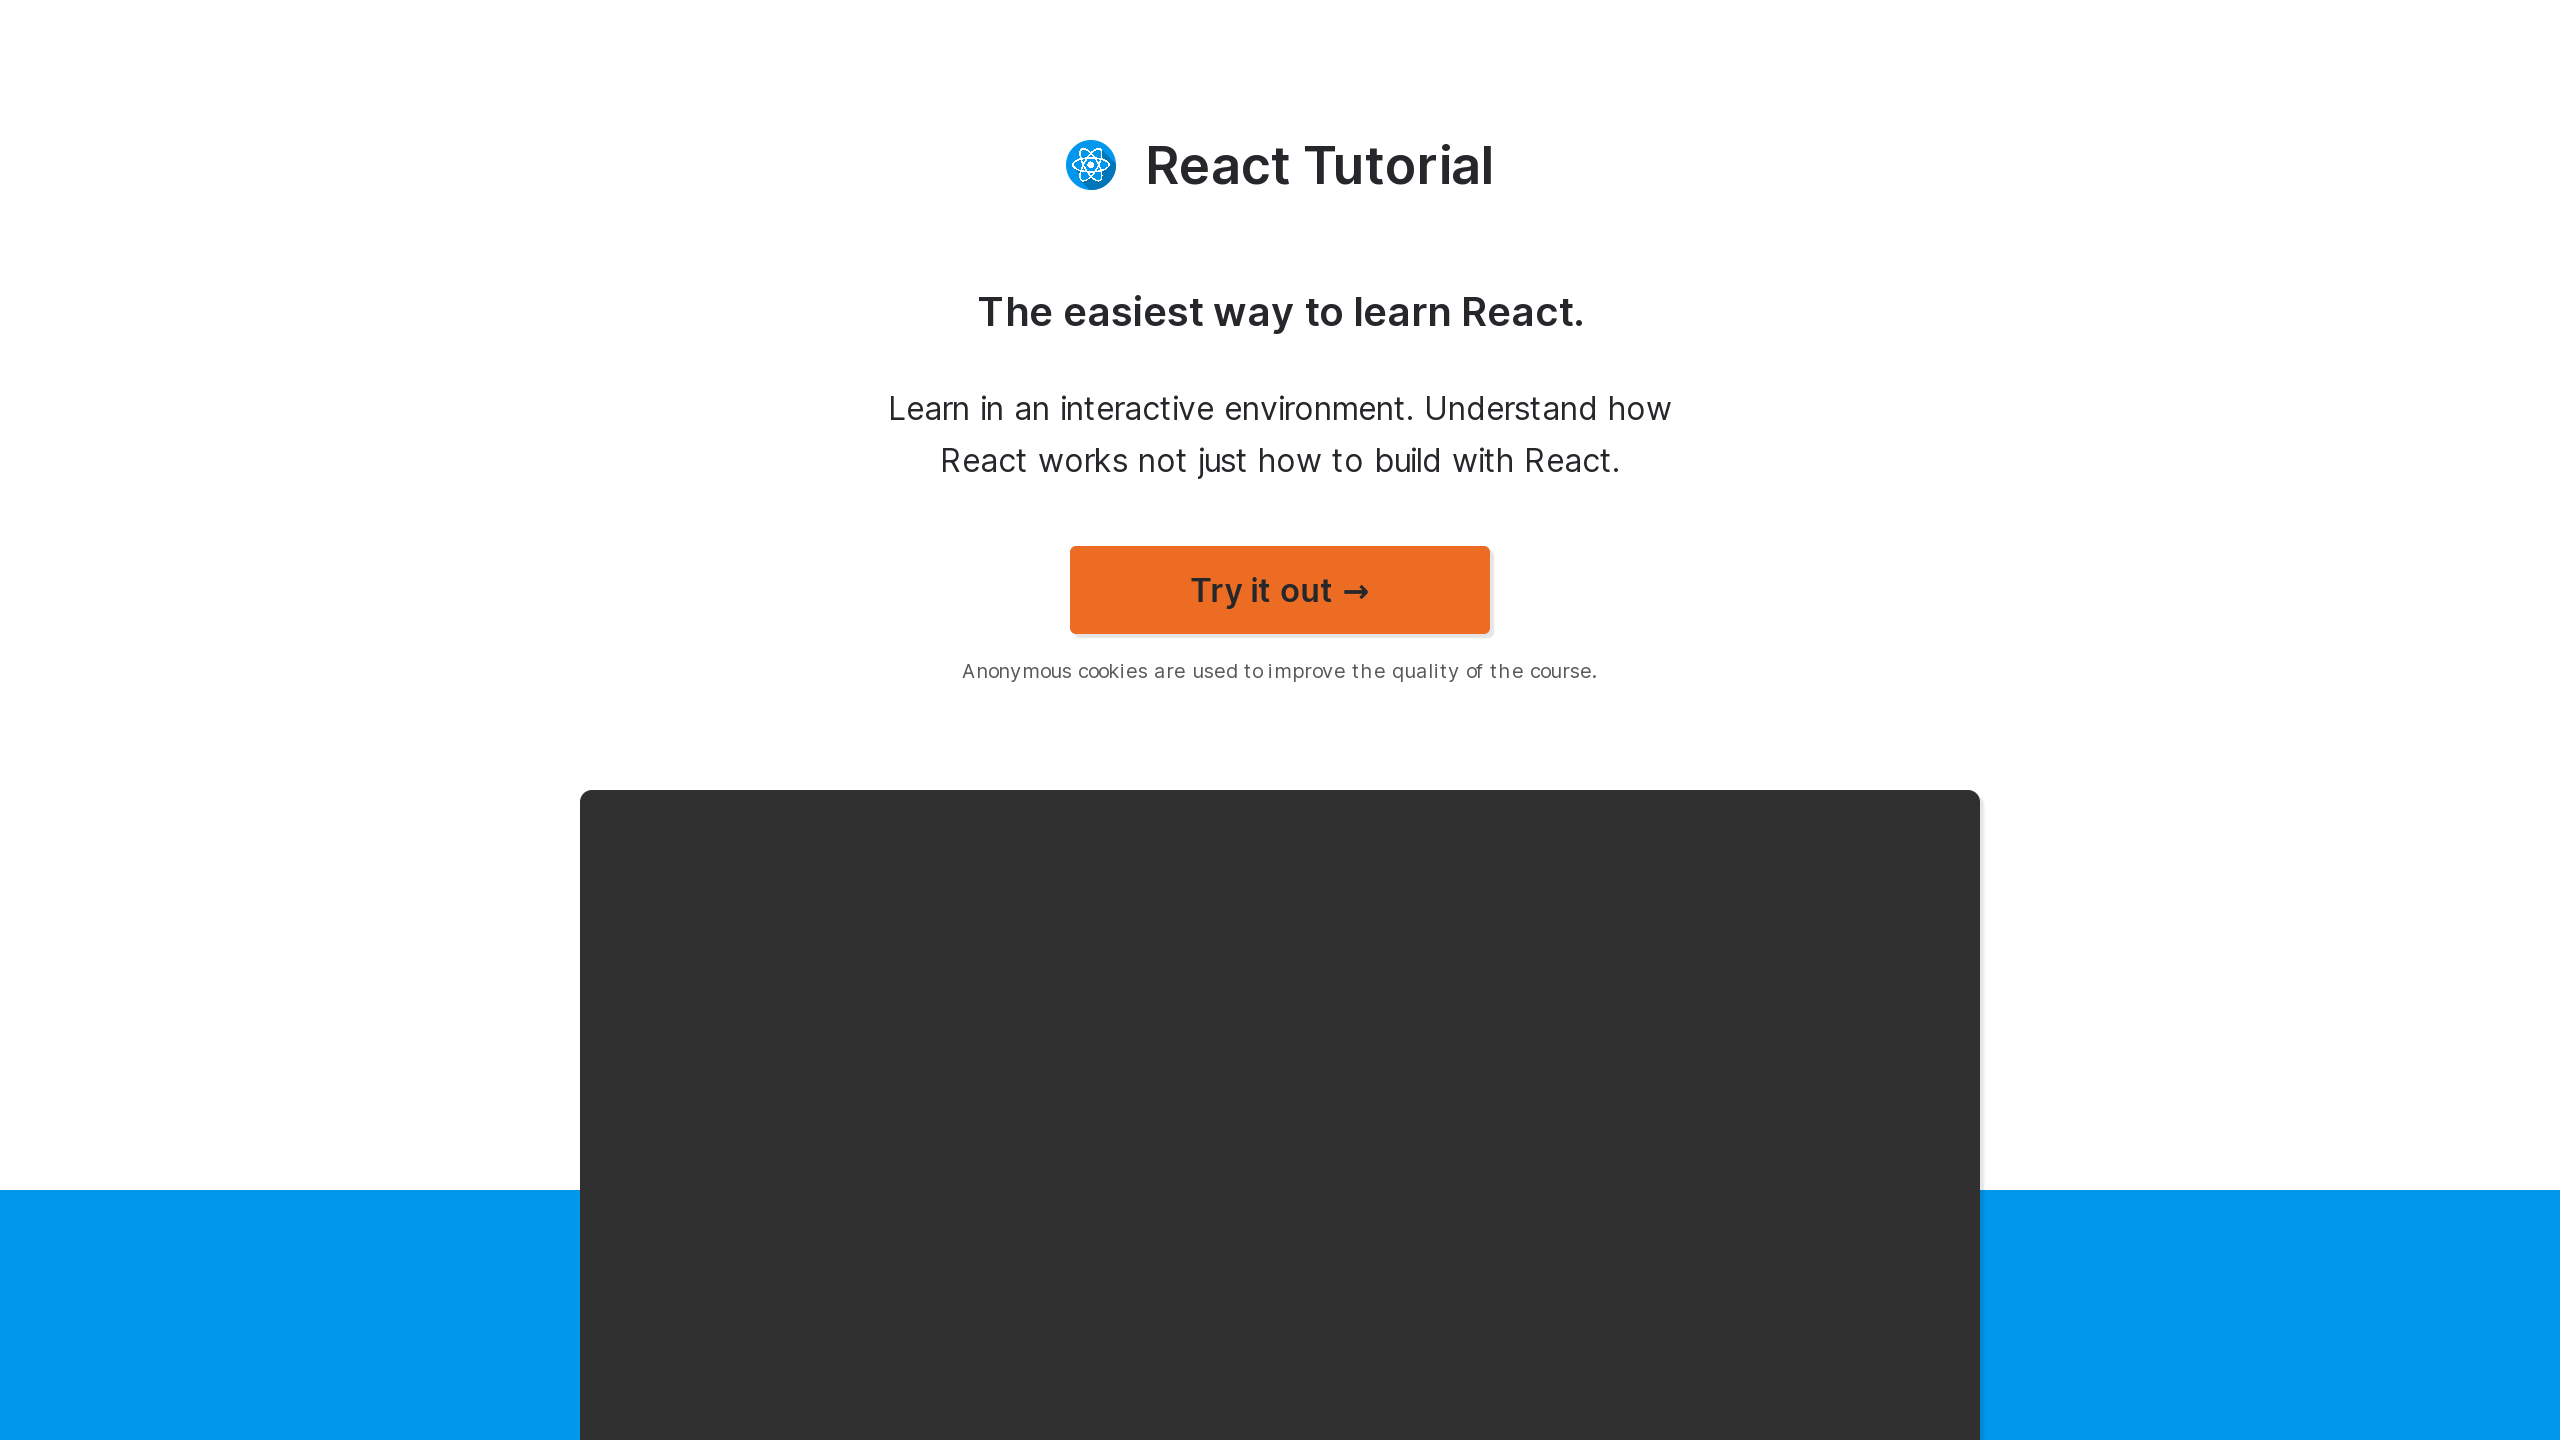 React Tutorial's website screenshot